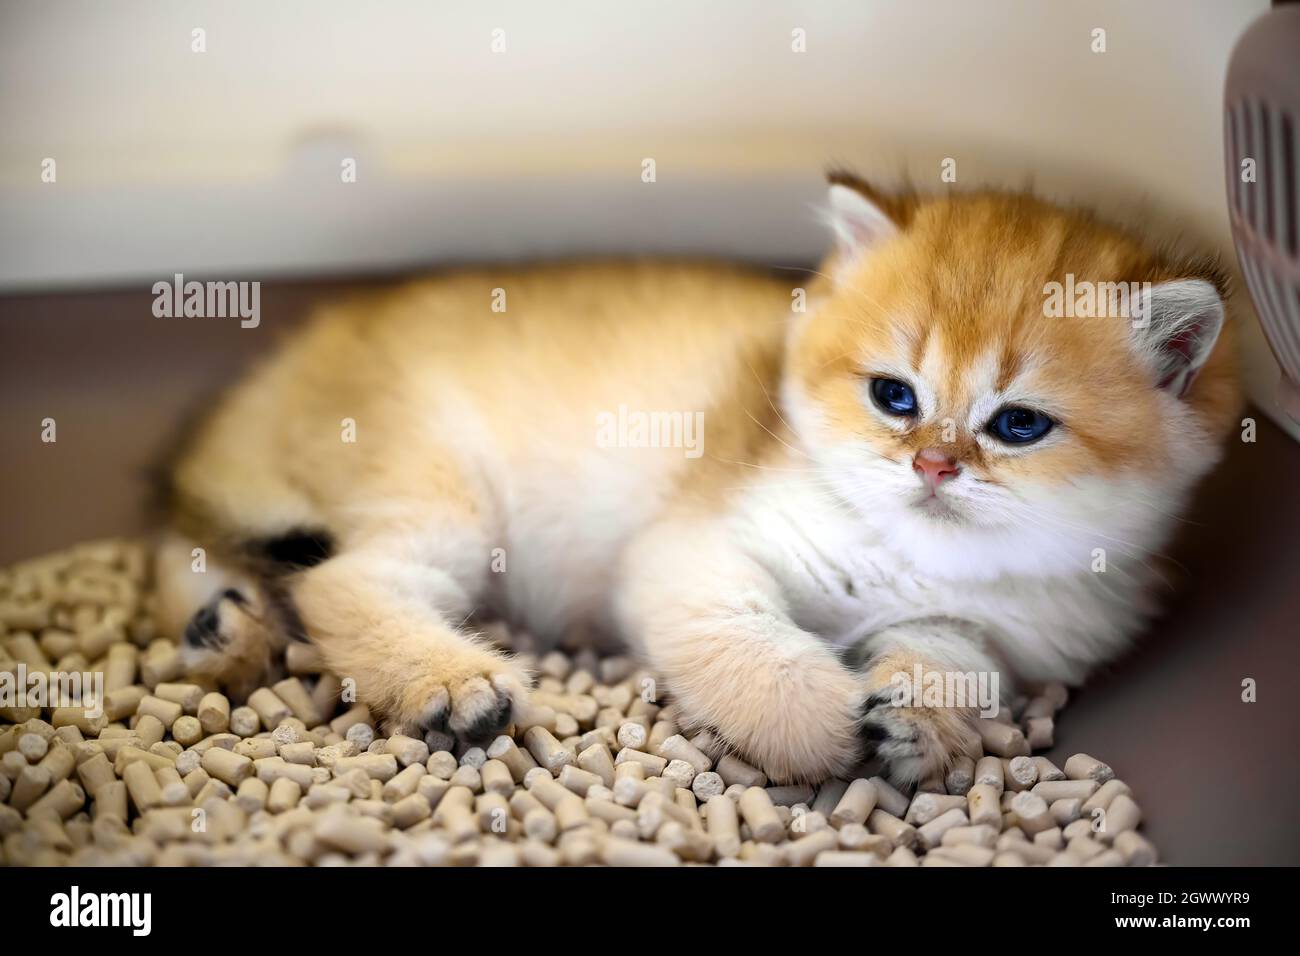 Cute little kitten sitting in the litter box with tofu cat litter, Golden British Shorthair kitten is sleepy. The cat sleeps in the box. Stock Photo